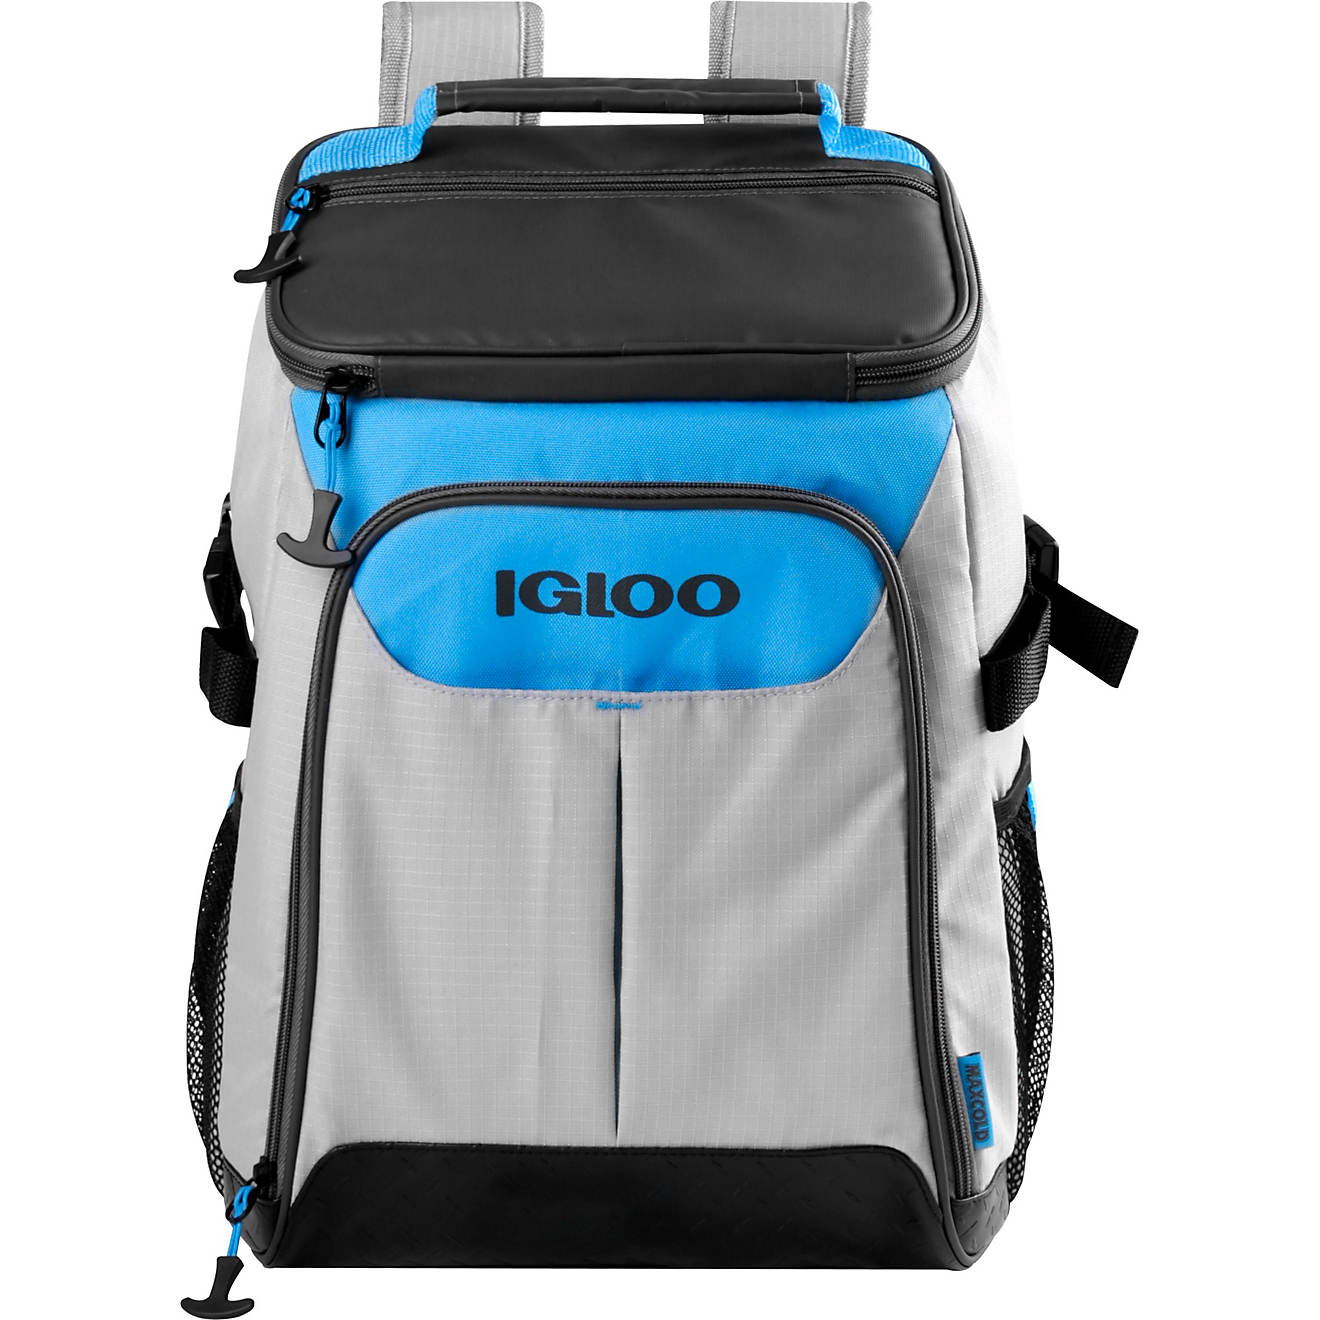 Igloo Trek Cooler Backpack                                                                                                       - view number 1